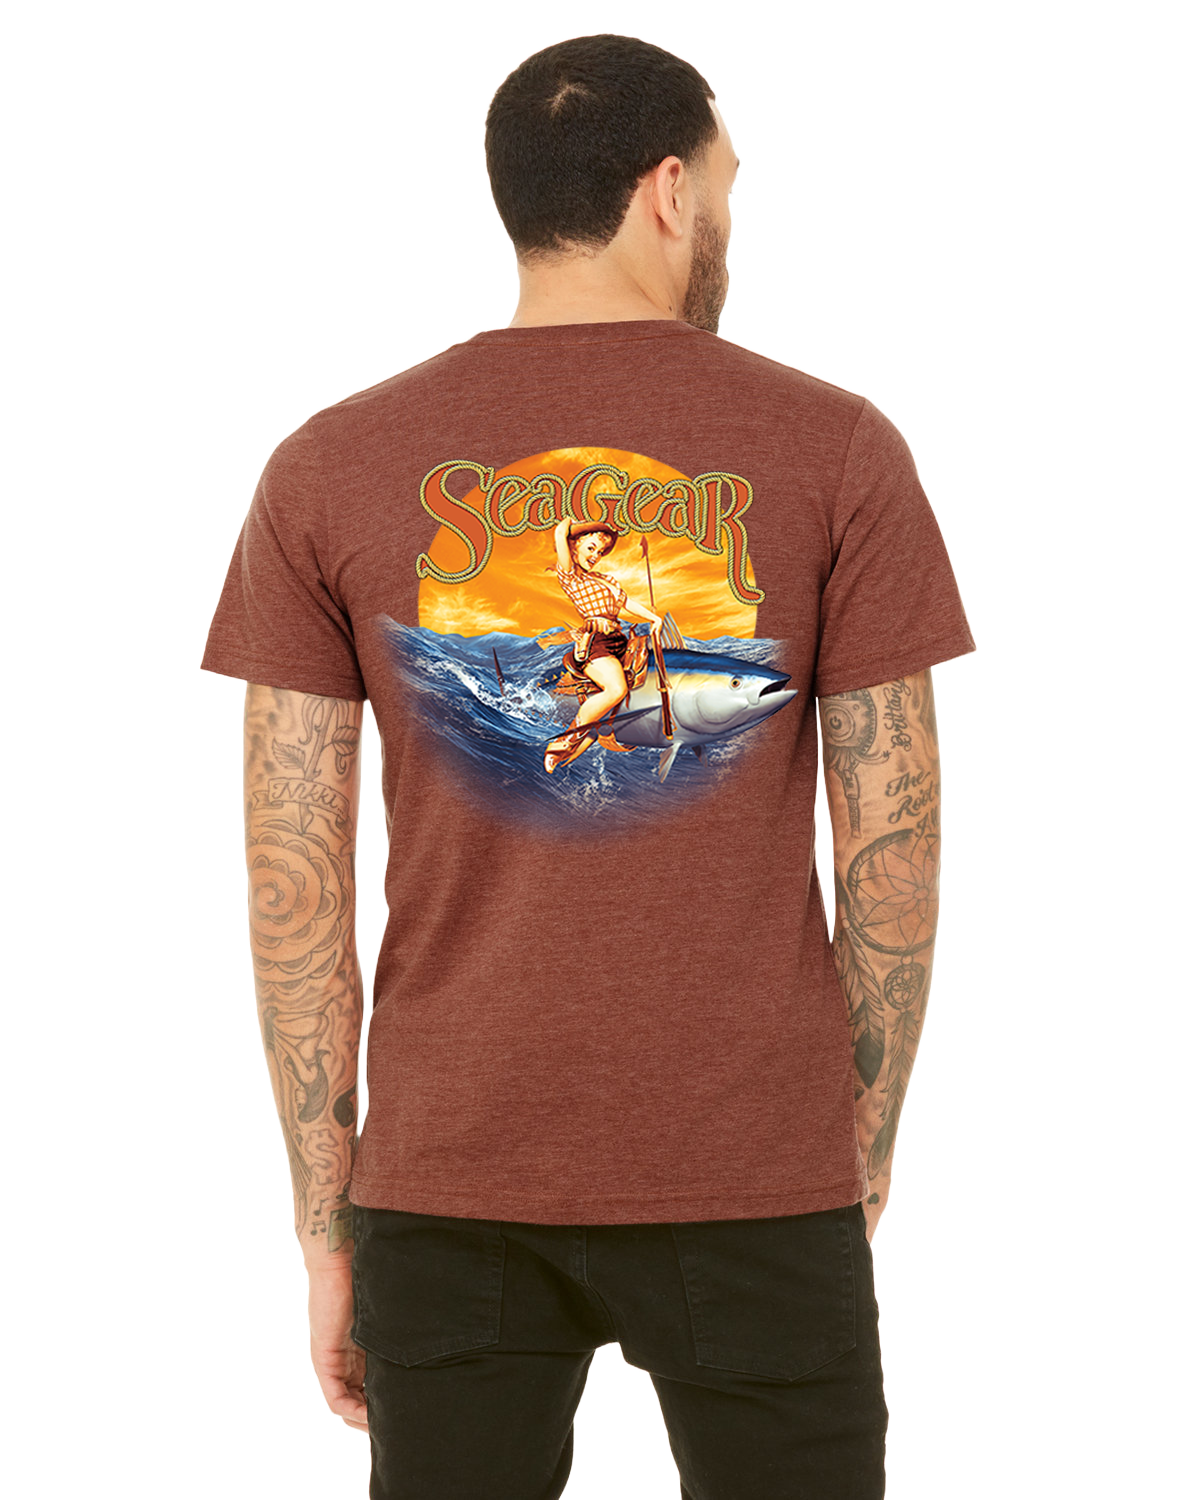 BIG CATCH SHIRT Tan Vented Fishing Shirt ~ Short Sleeve ~ Men's Medium